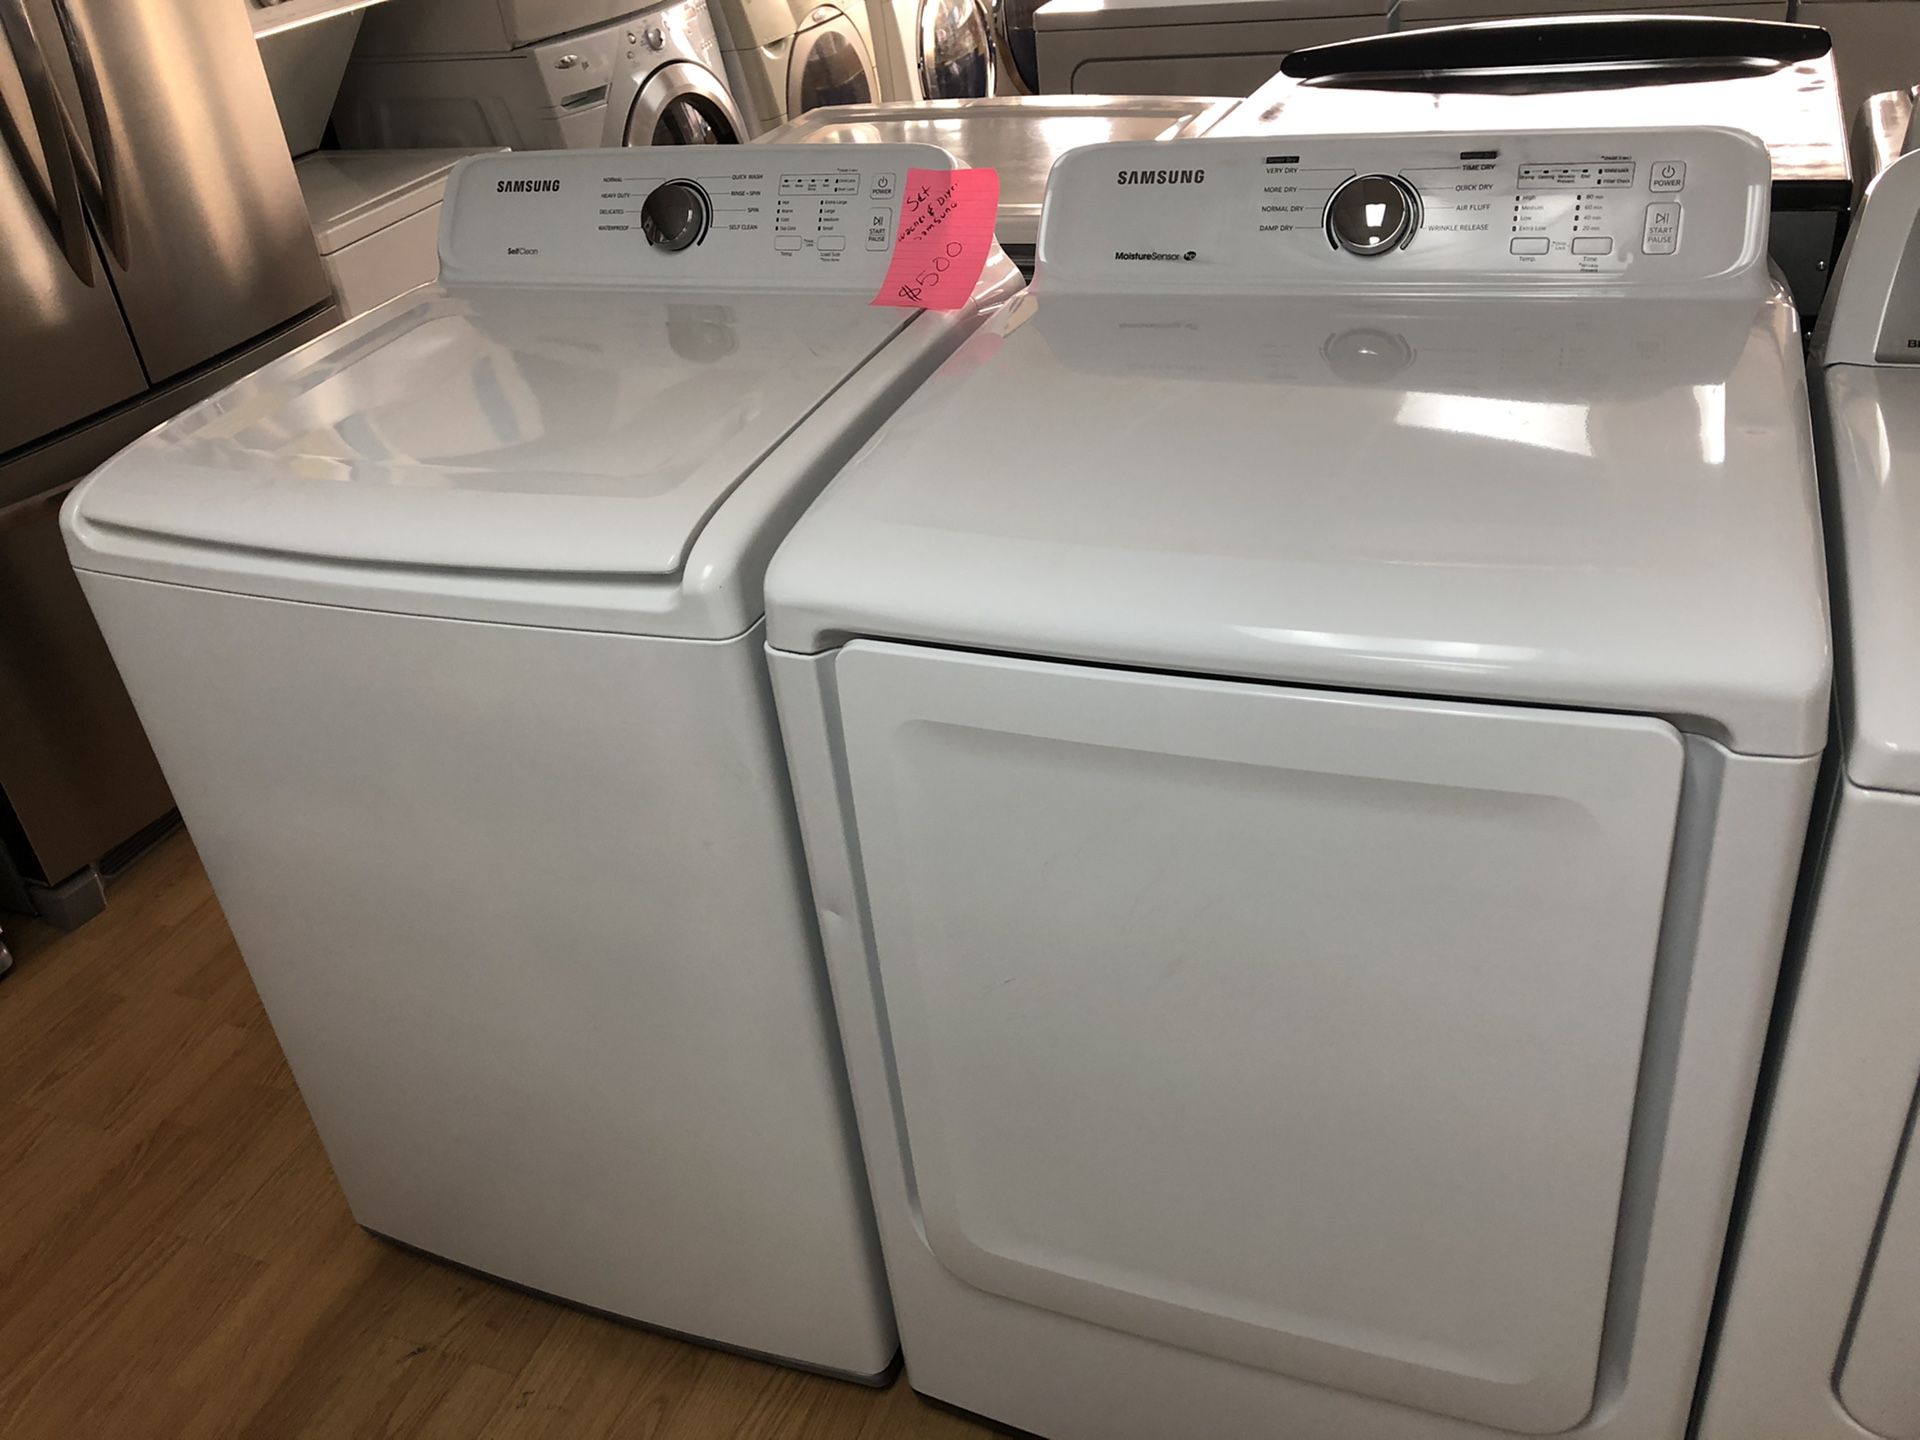 Samsung white washer and dryer set